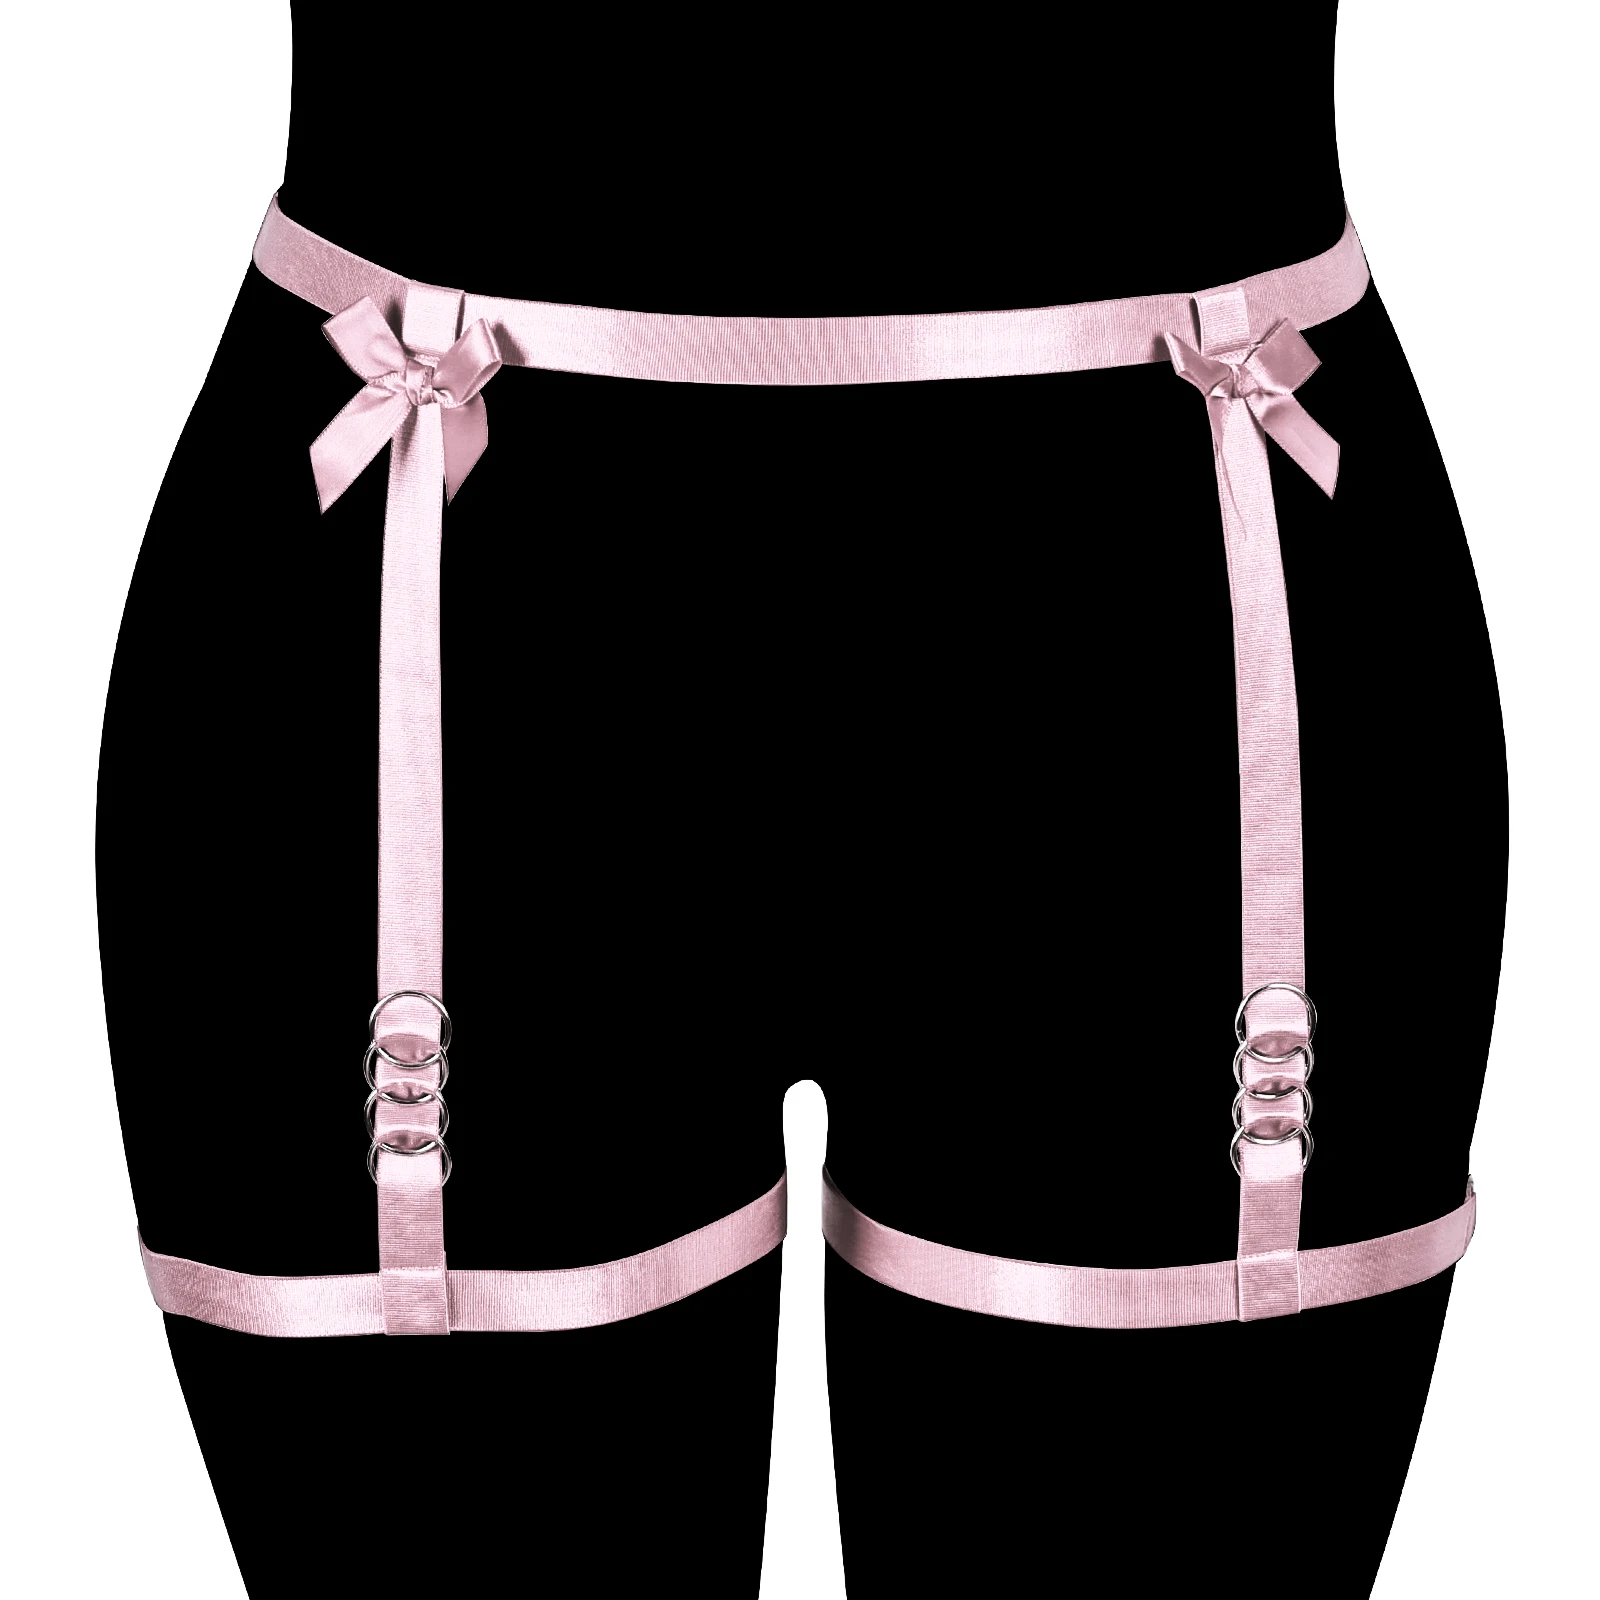 

Women Bondage Goth Underwear Bow Garter Belt Plus Size Sexy Lingerie Erotic Bdsm Harness Body Suspenders Socks Stockings